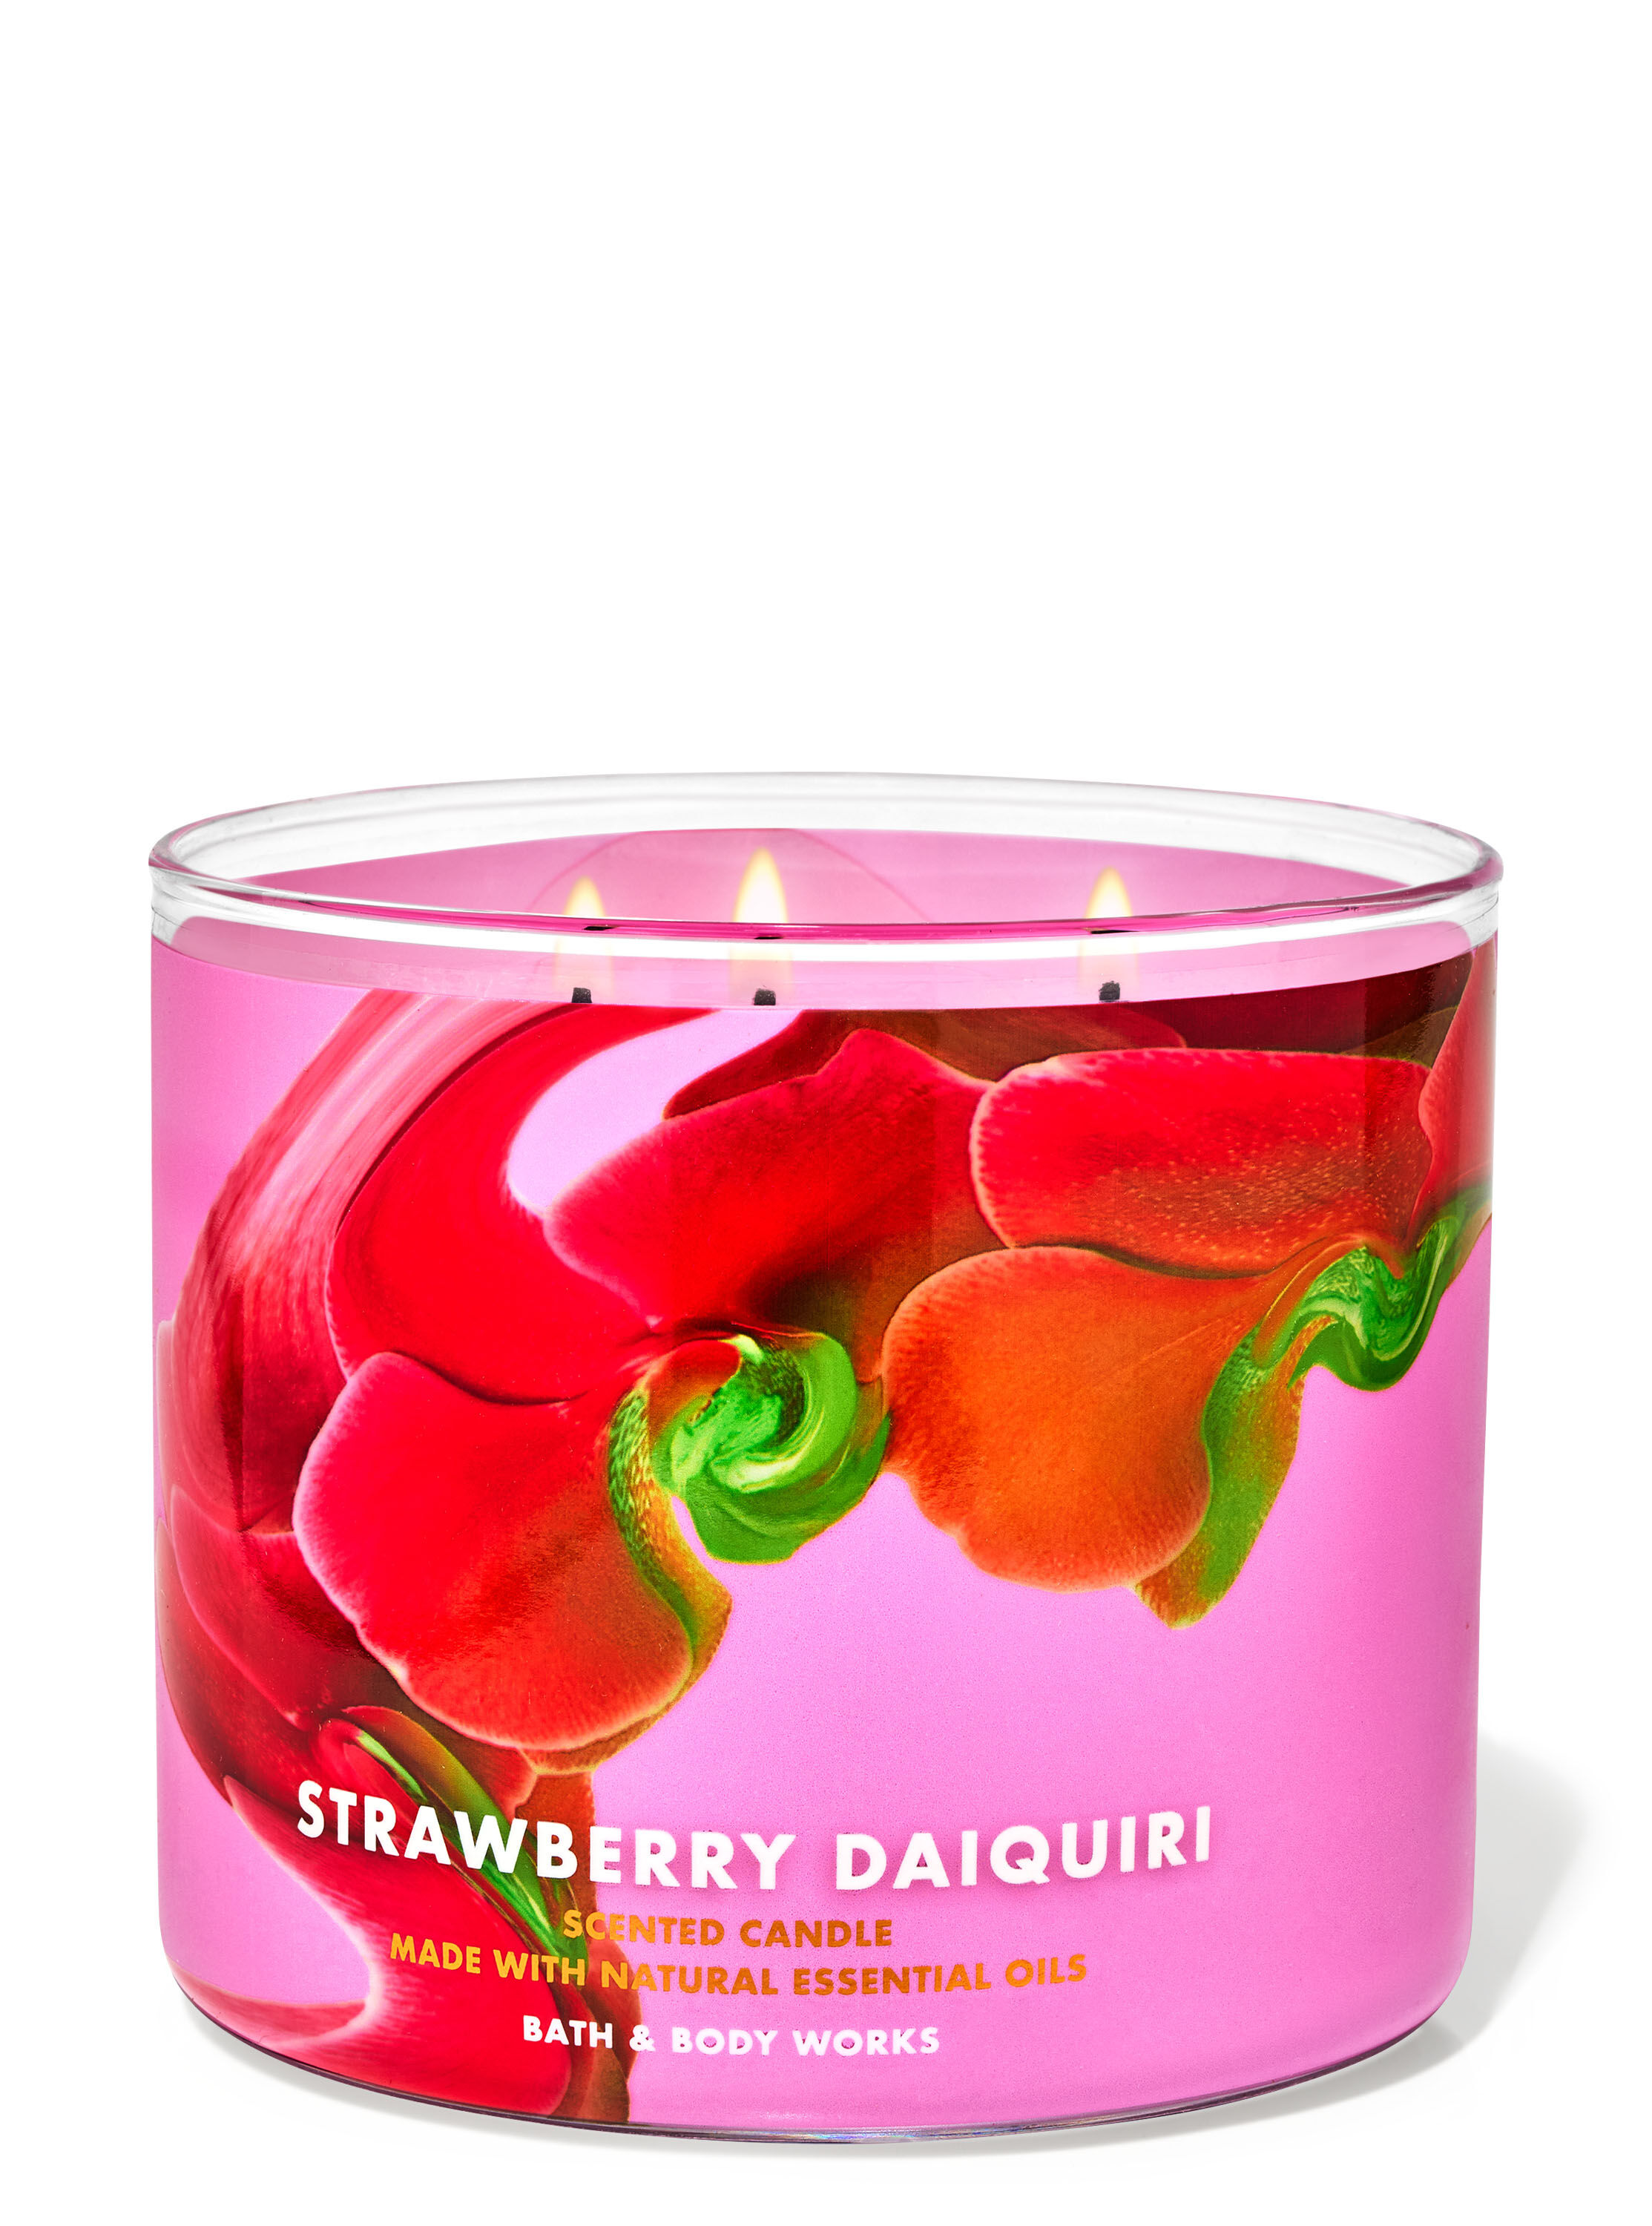 Strawberry Daiquiri 3-Wick Candle